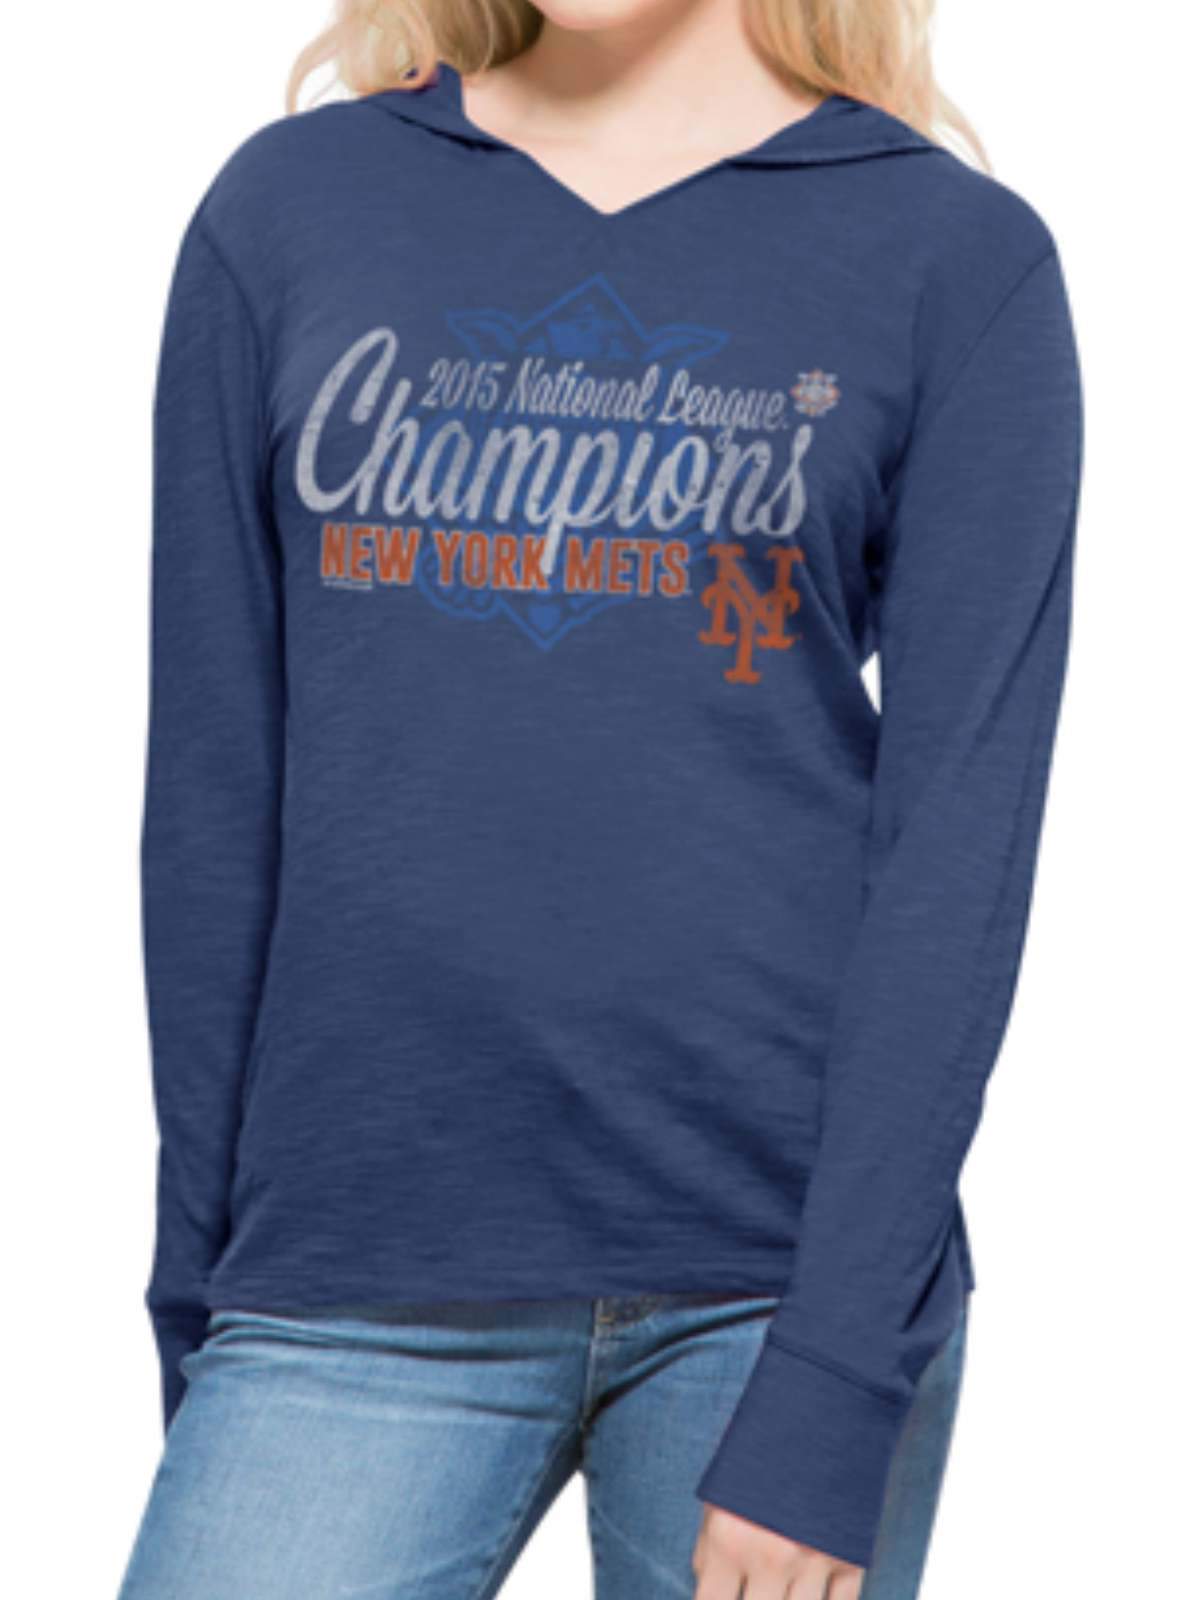 Mets World Series T-Shirts & Hoodies 2015